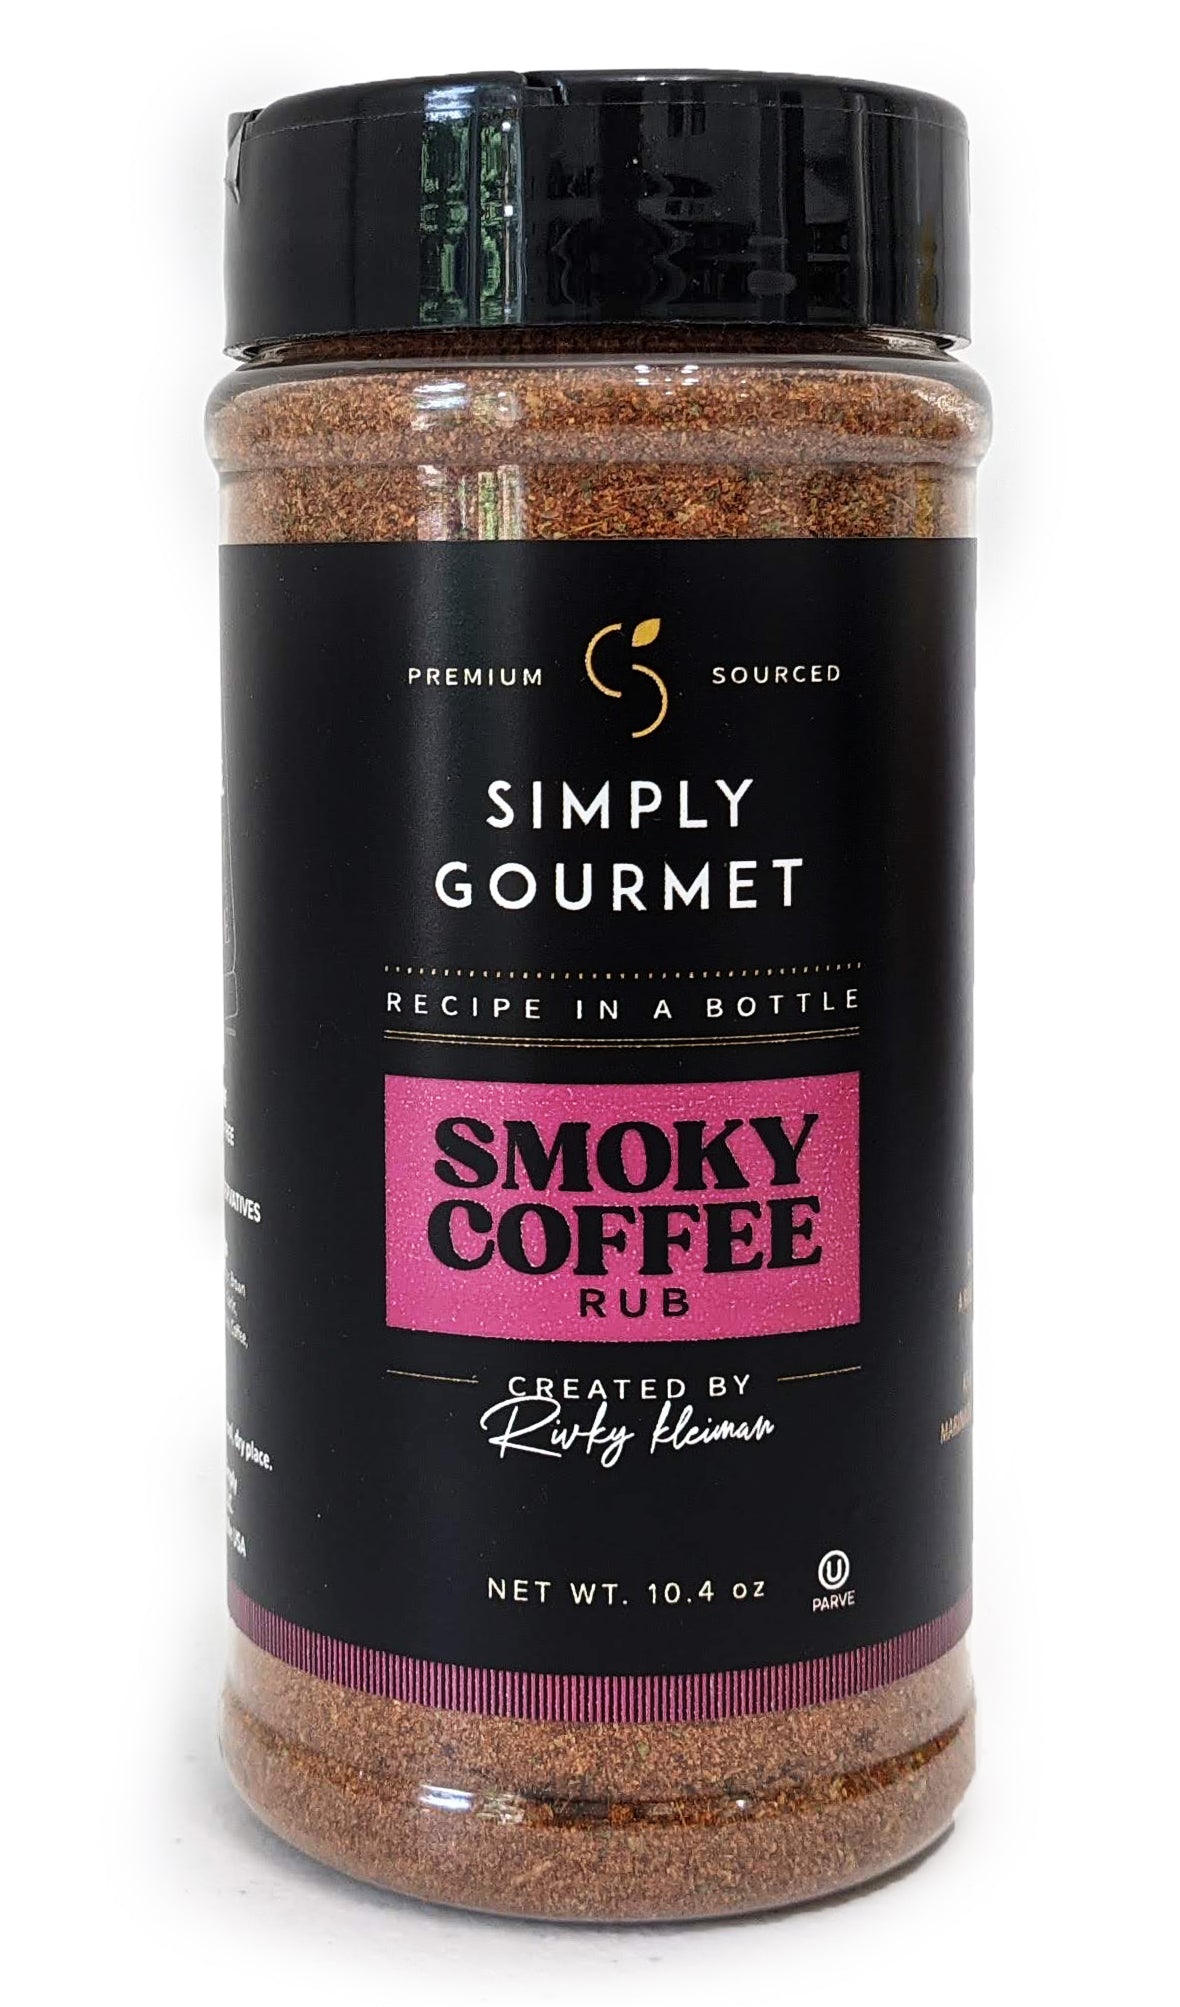 Simply Gourmet, Smoky Coffee Rub, created by Rivky Kleiman